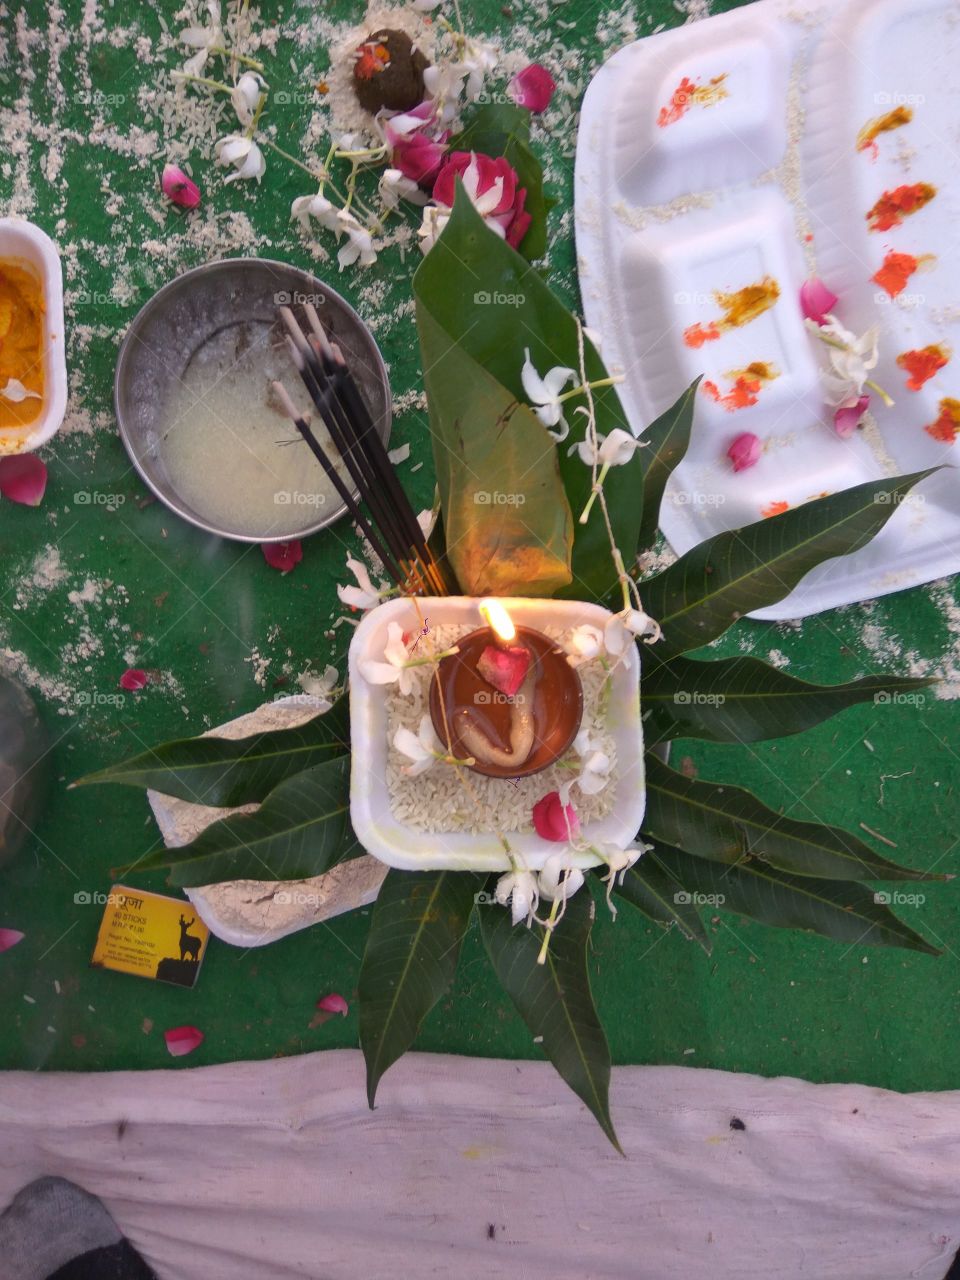 worship 
chirag
rice 
flowers 
agarbatti
mango tree lives